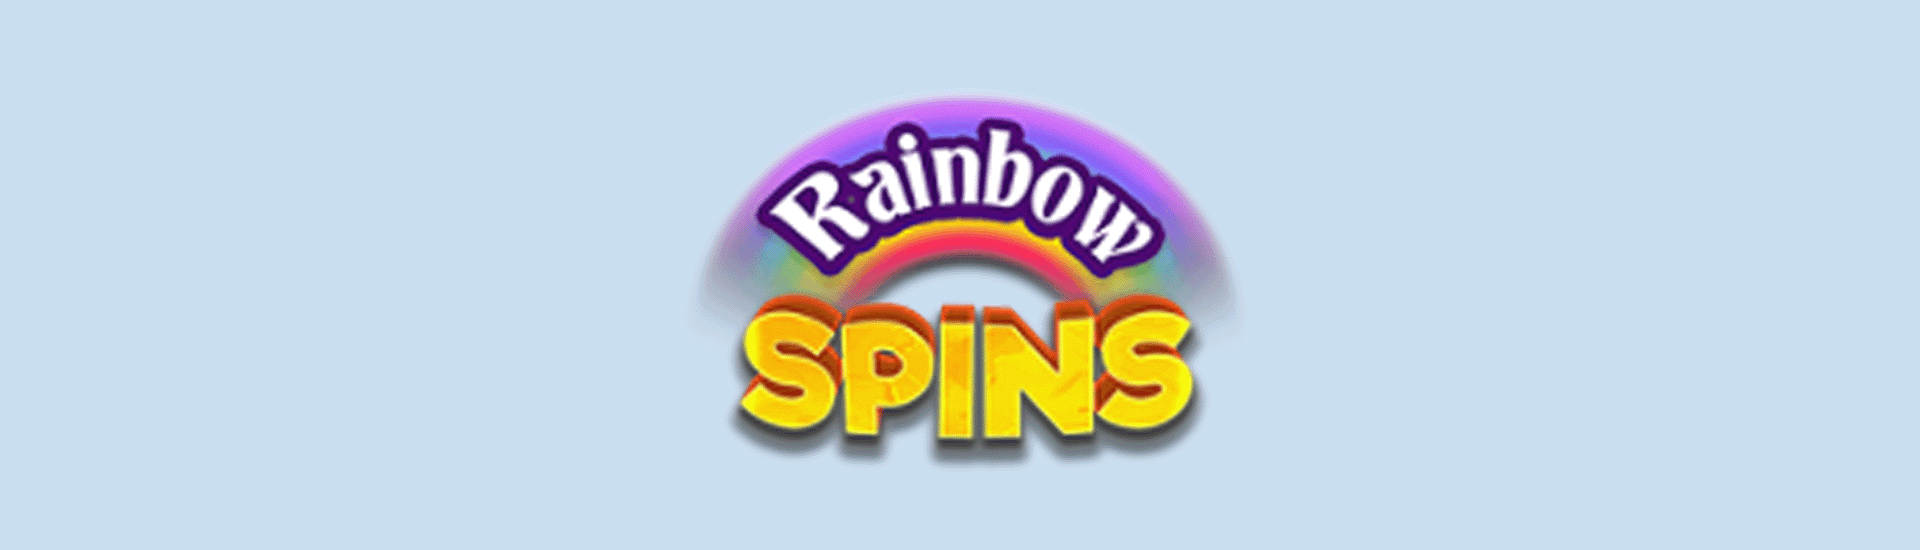 rainbow spins logo